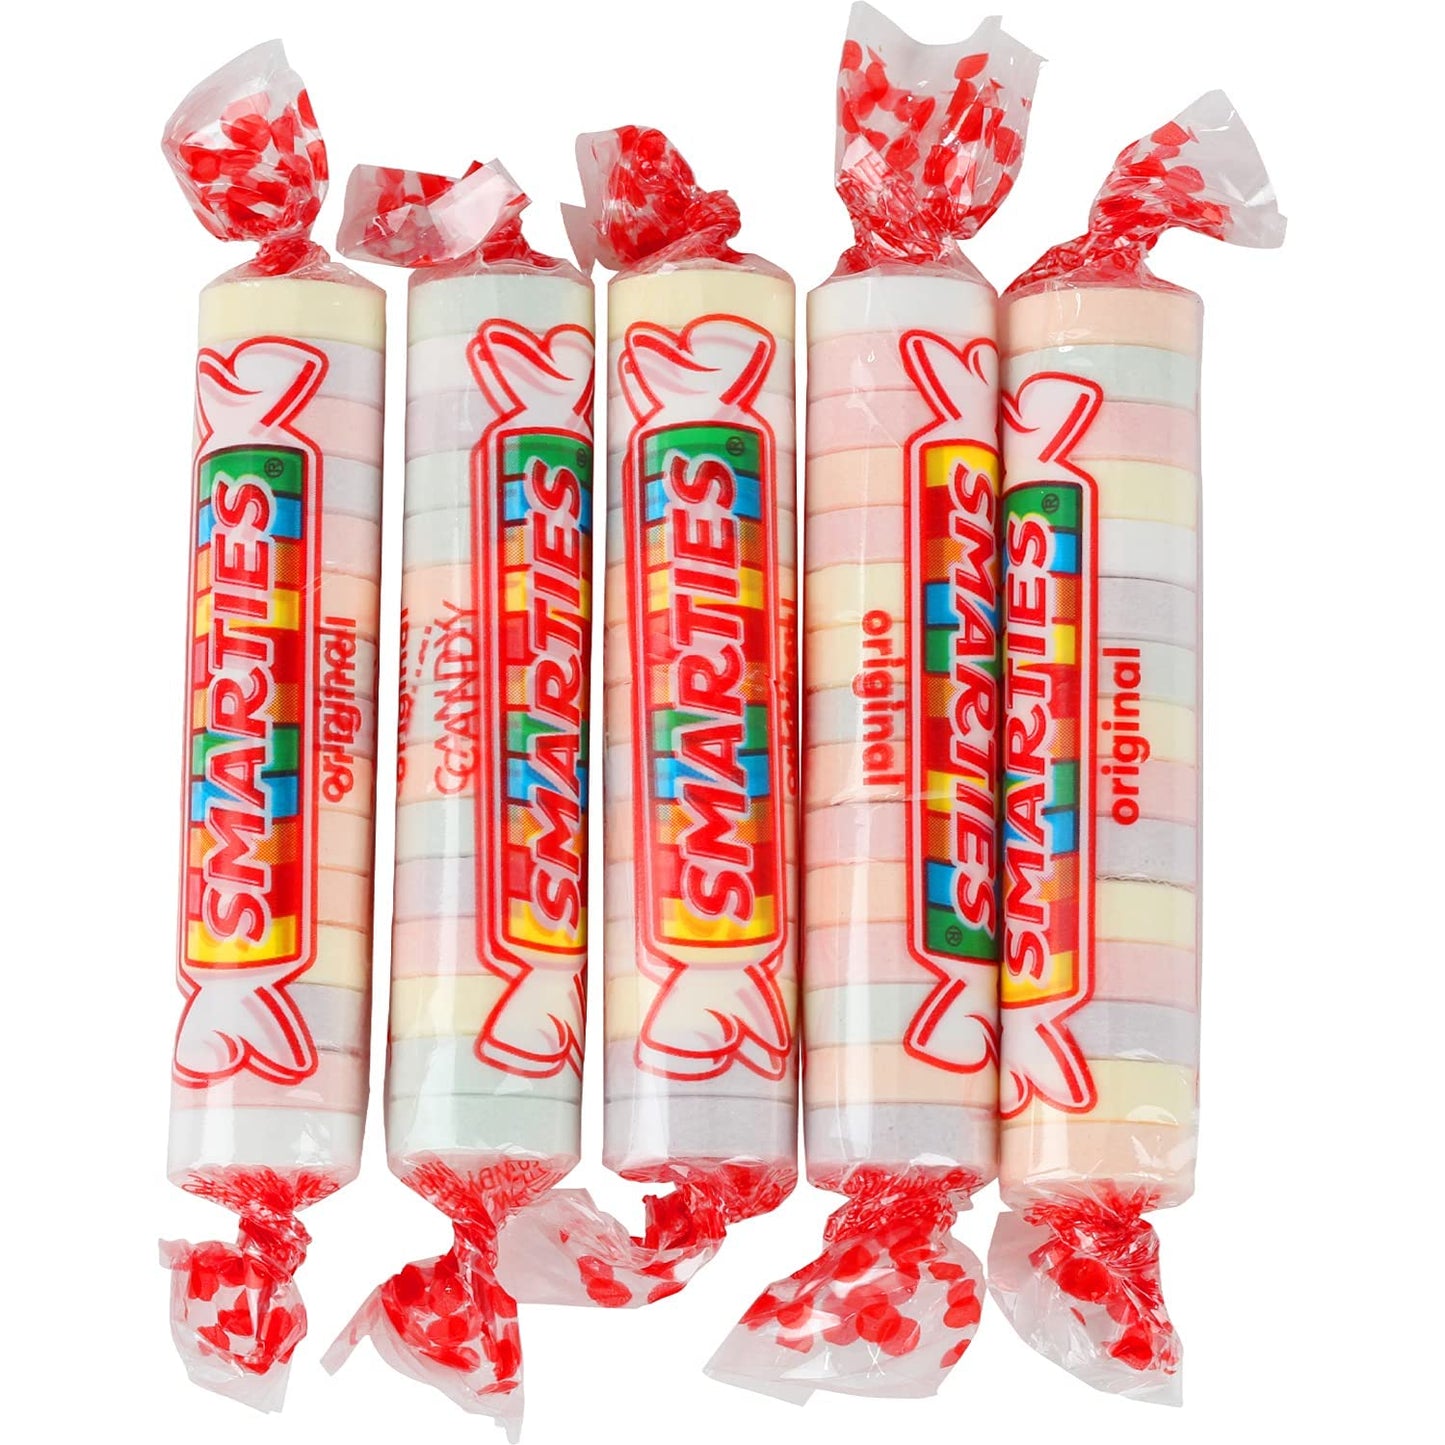 Smarties Candy Rolls Bulk - 5 Pounds - Original Flavor